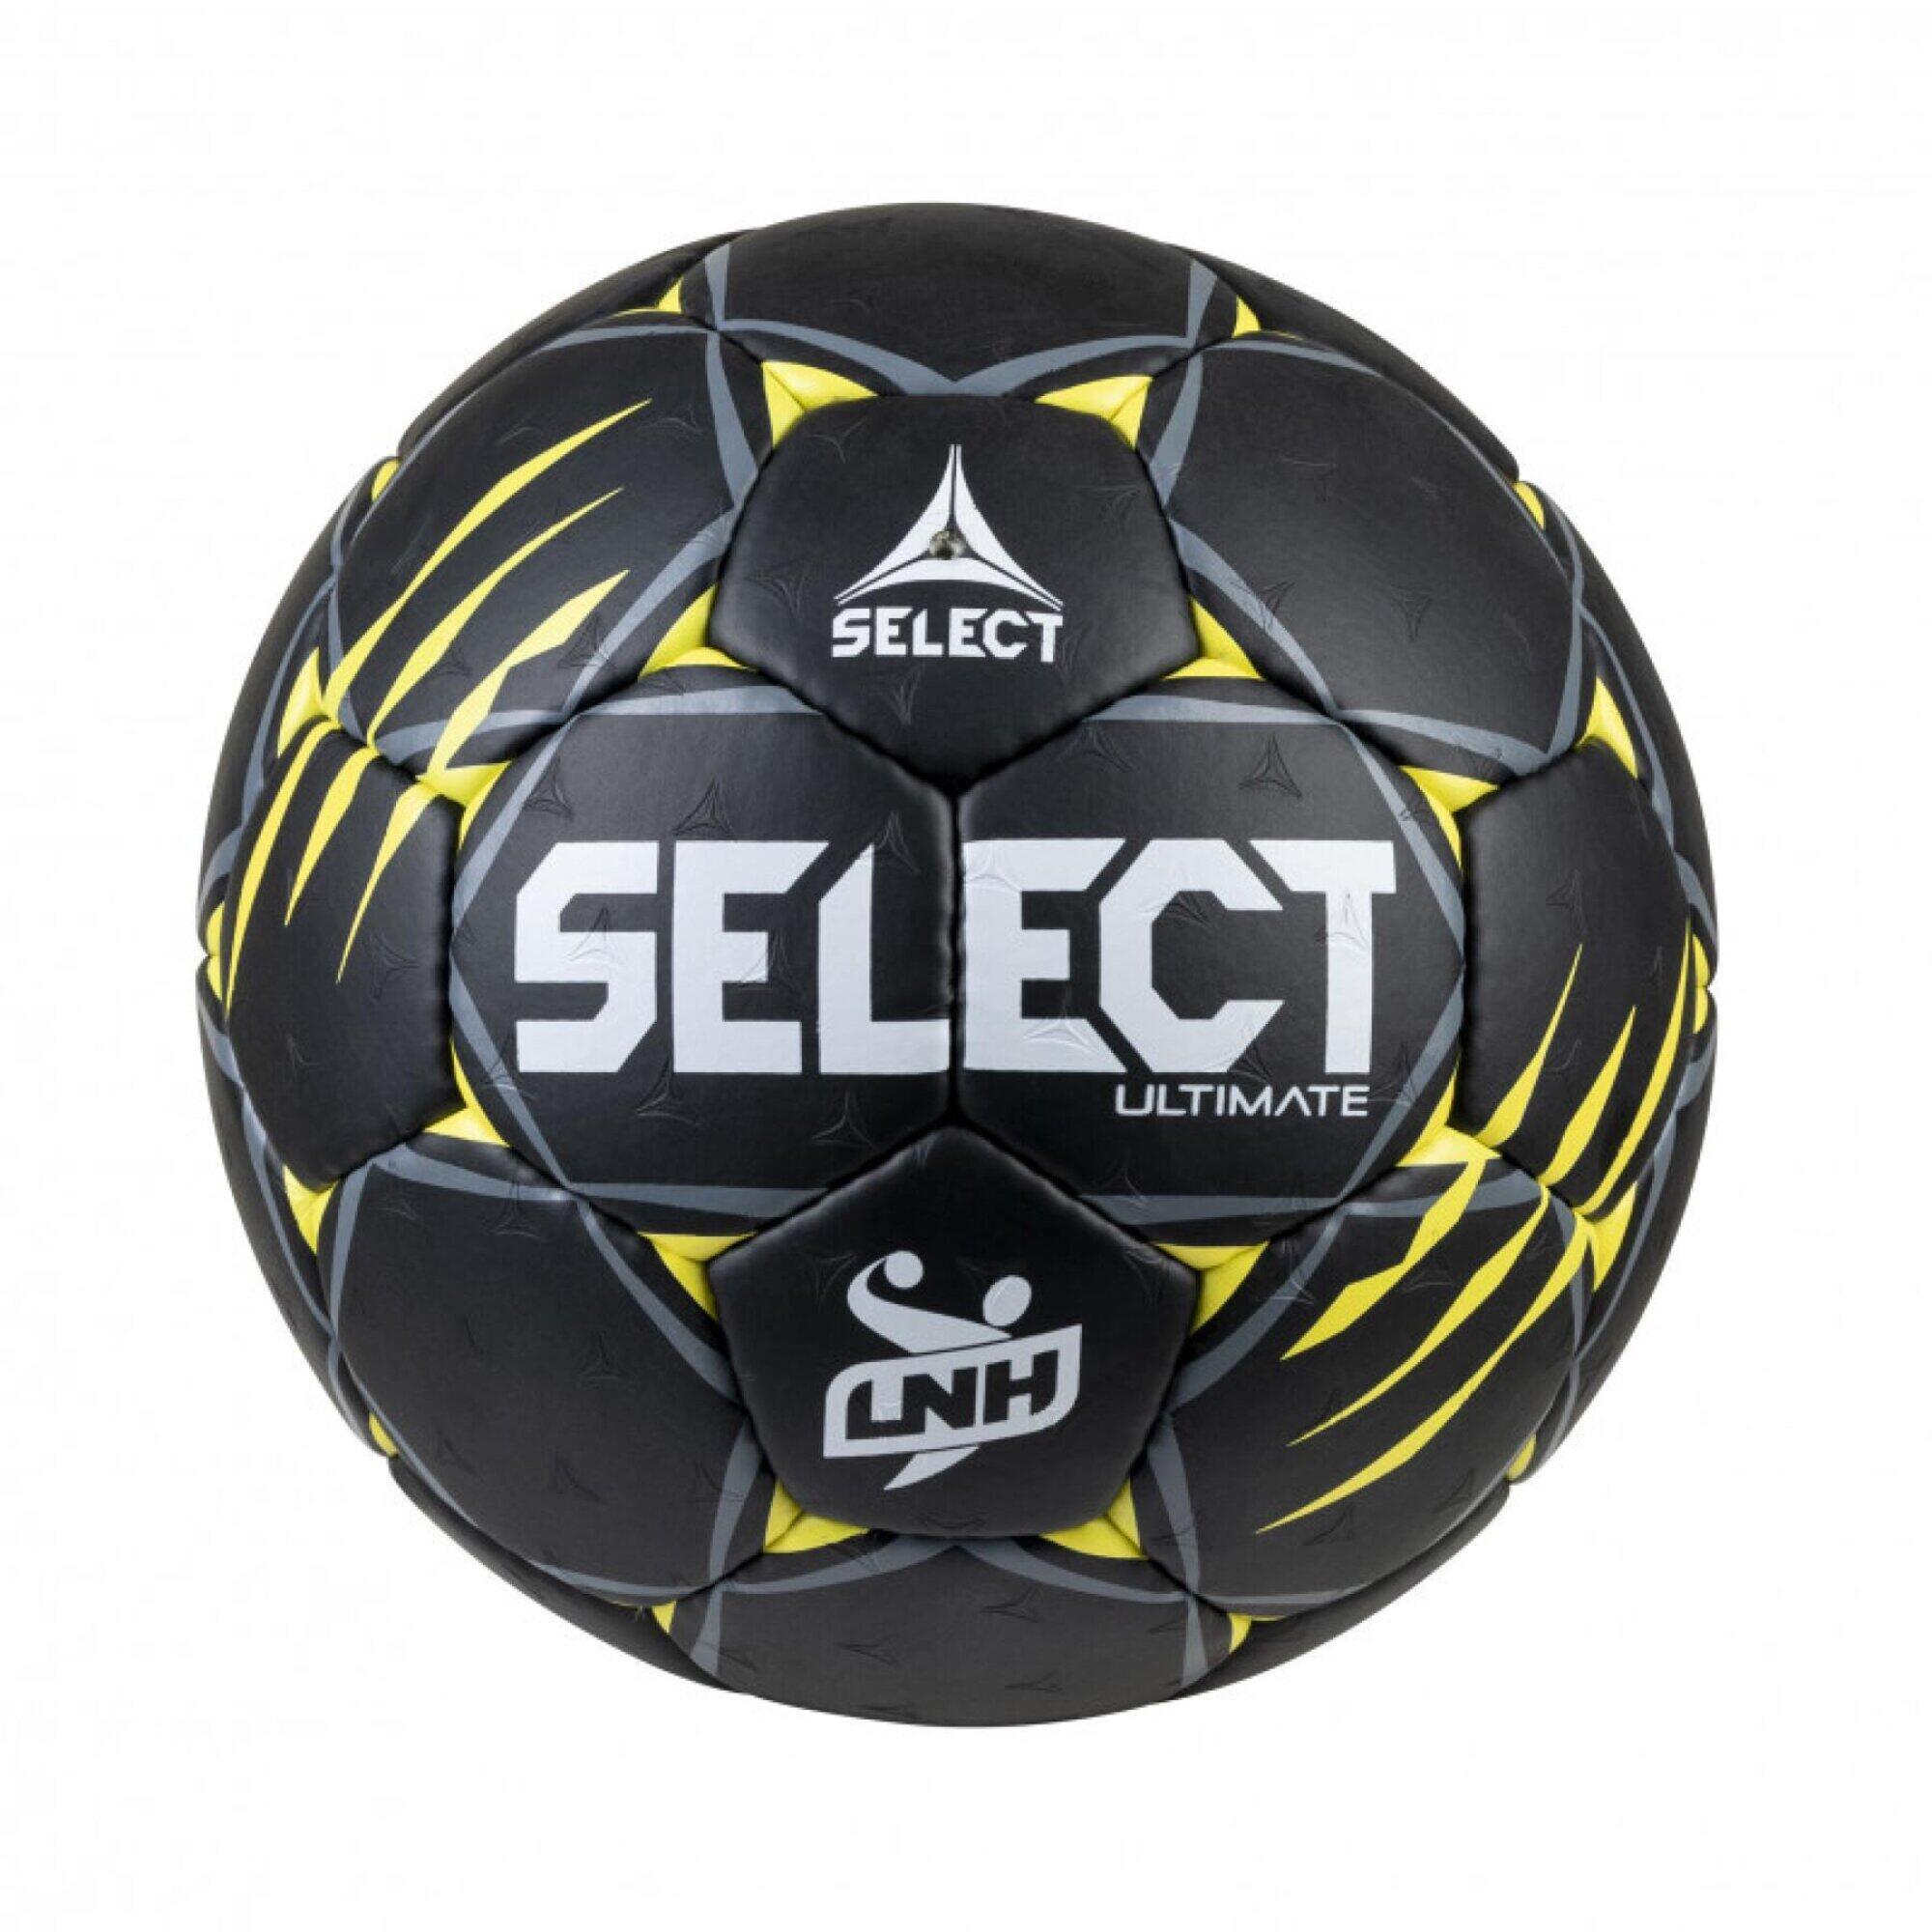 SELECT Ballon De Handball Select Ultimate Lnh Taille 2 -